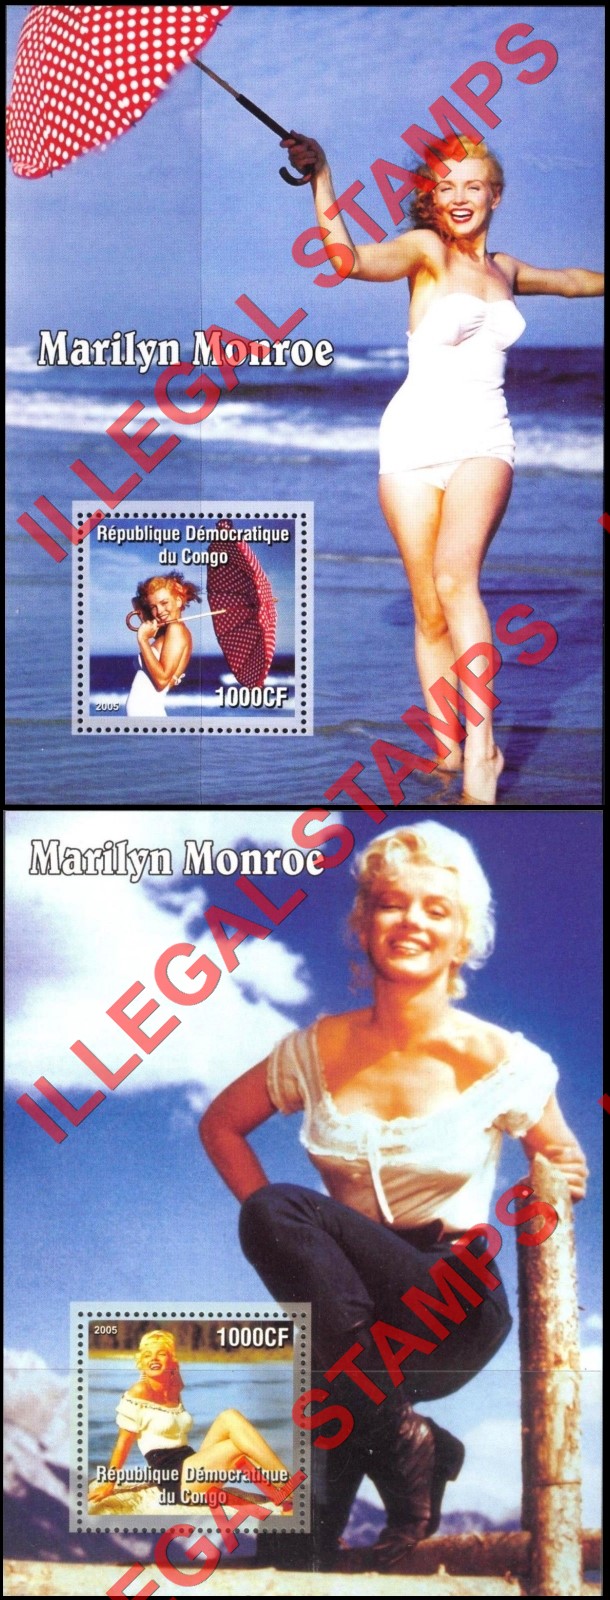 Congo Democratic Republic 2005 Marilyn Monroe Illegal Stamp Souvenir Sheets of 1 (Part 3)